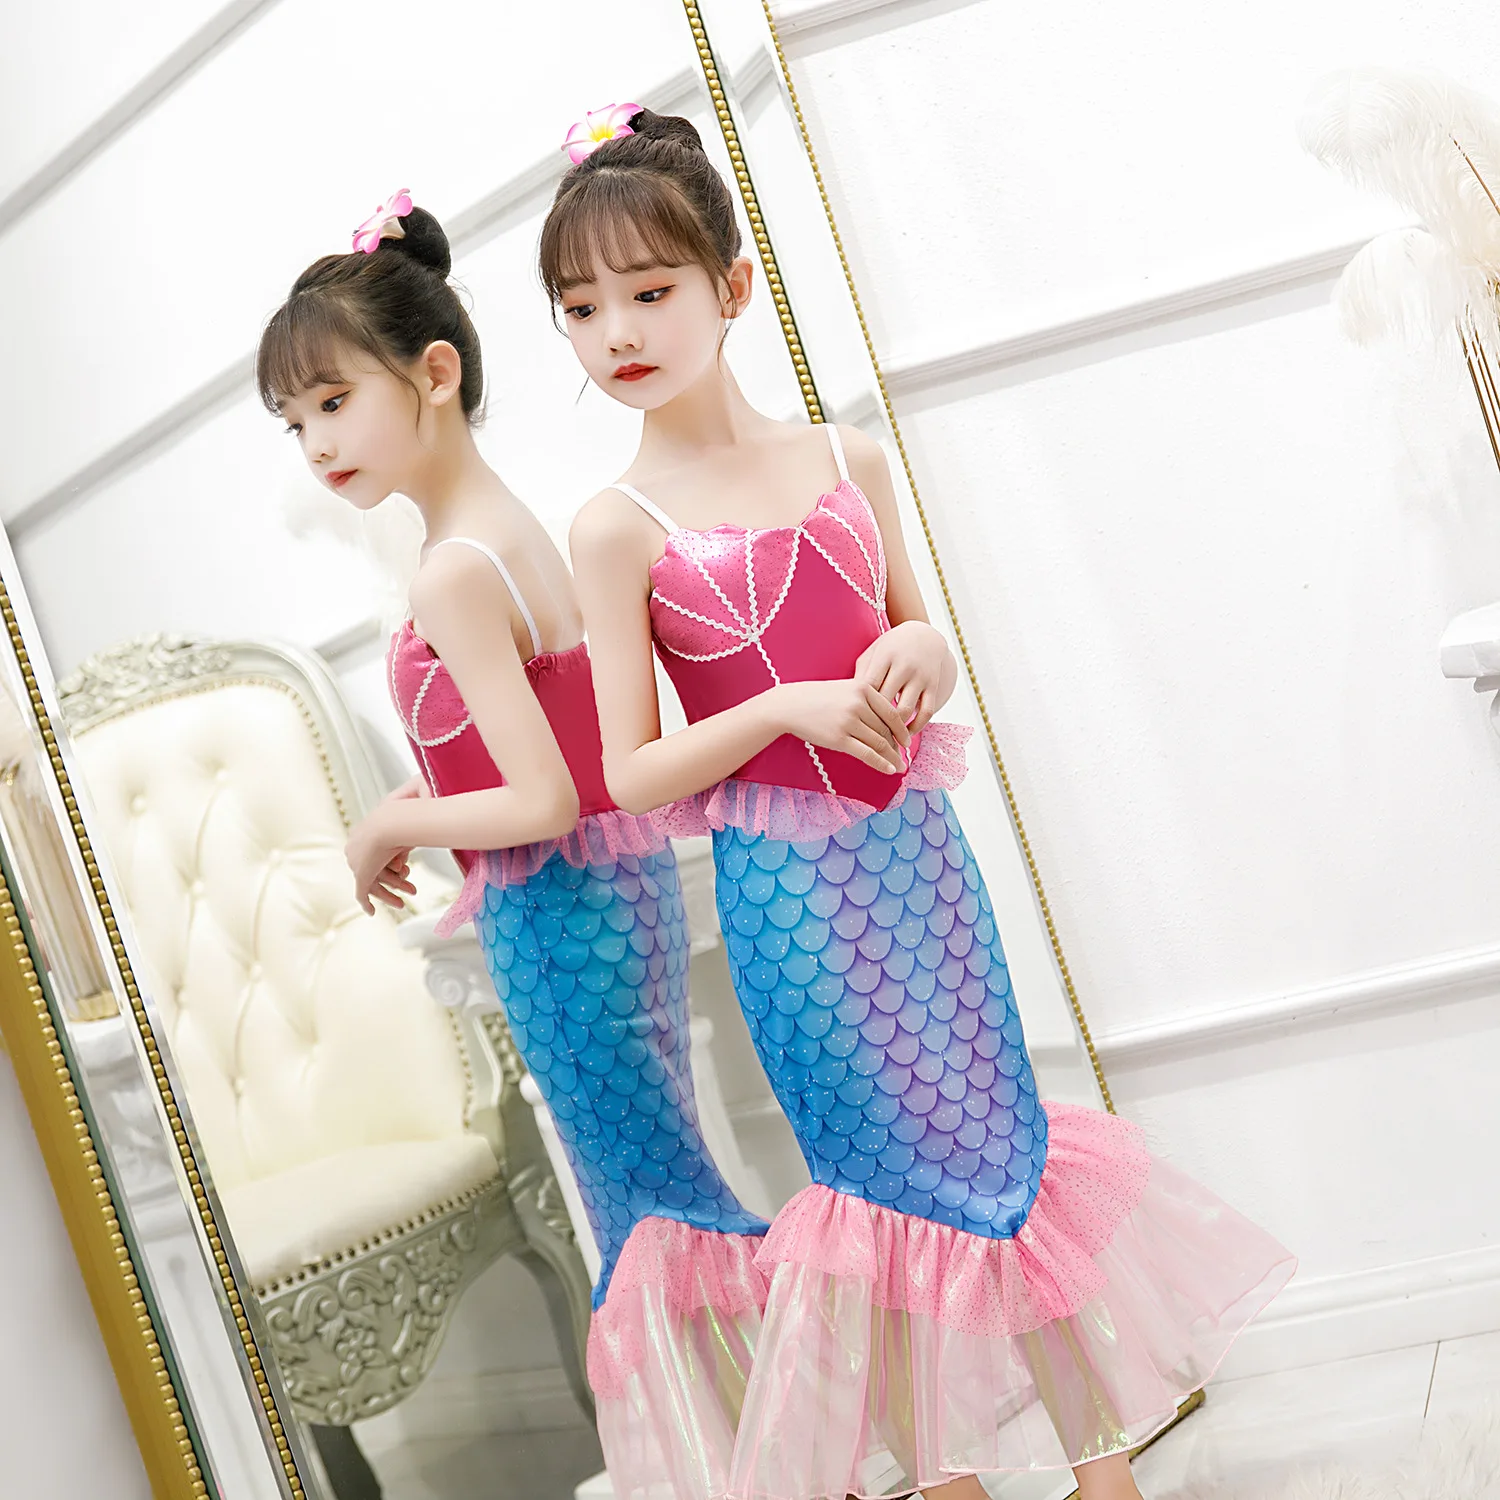 

Children Kid Cosplay Mermaid Costumes Party Fancy Dress Little Mermaid Ariel Princess Costume, Rose red color